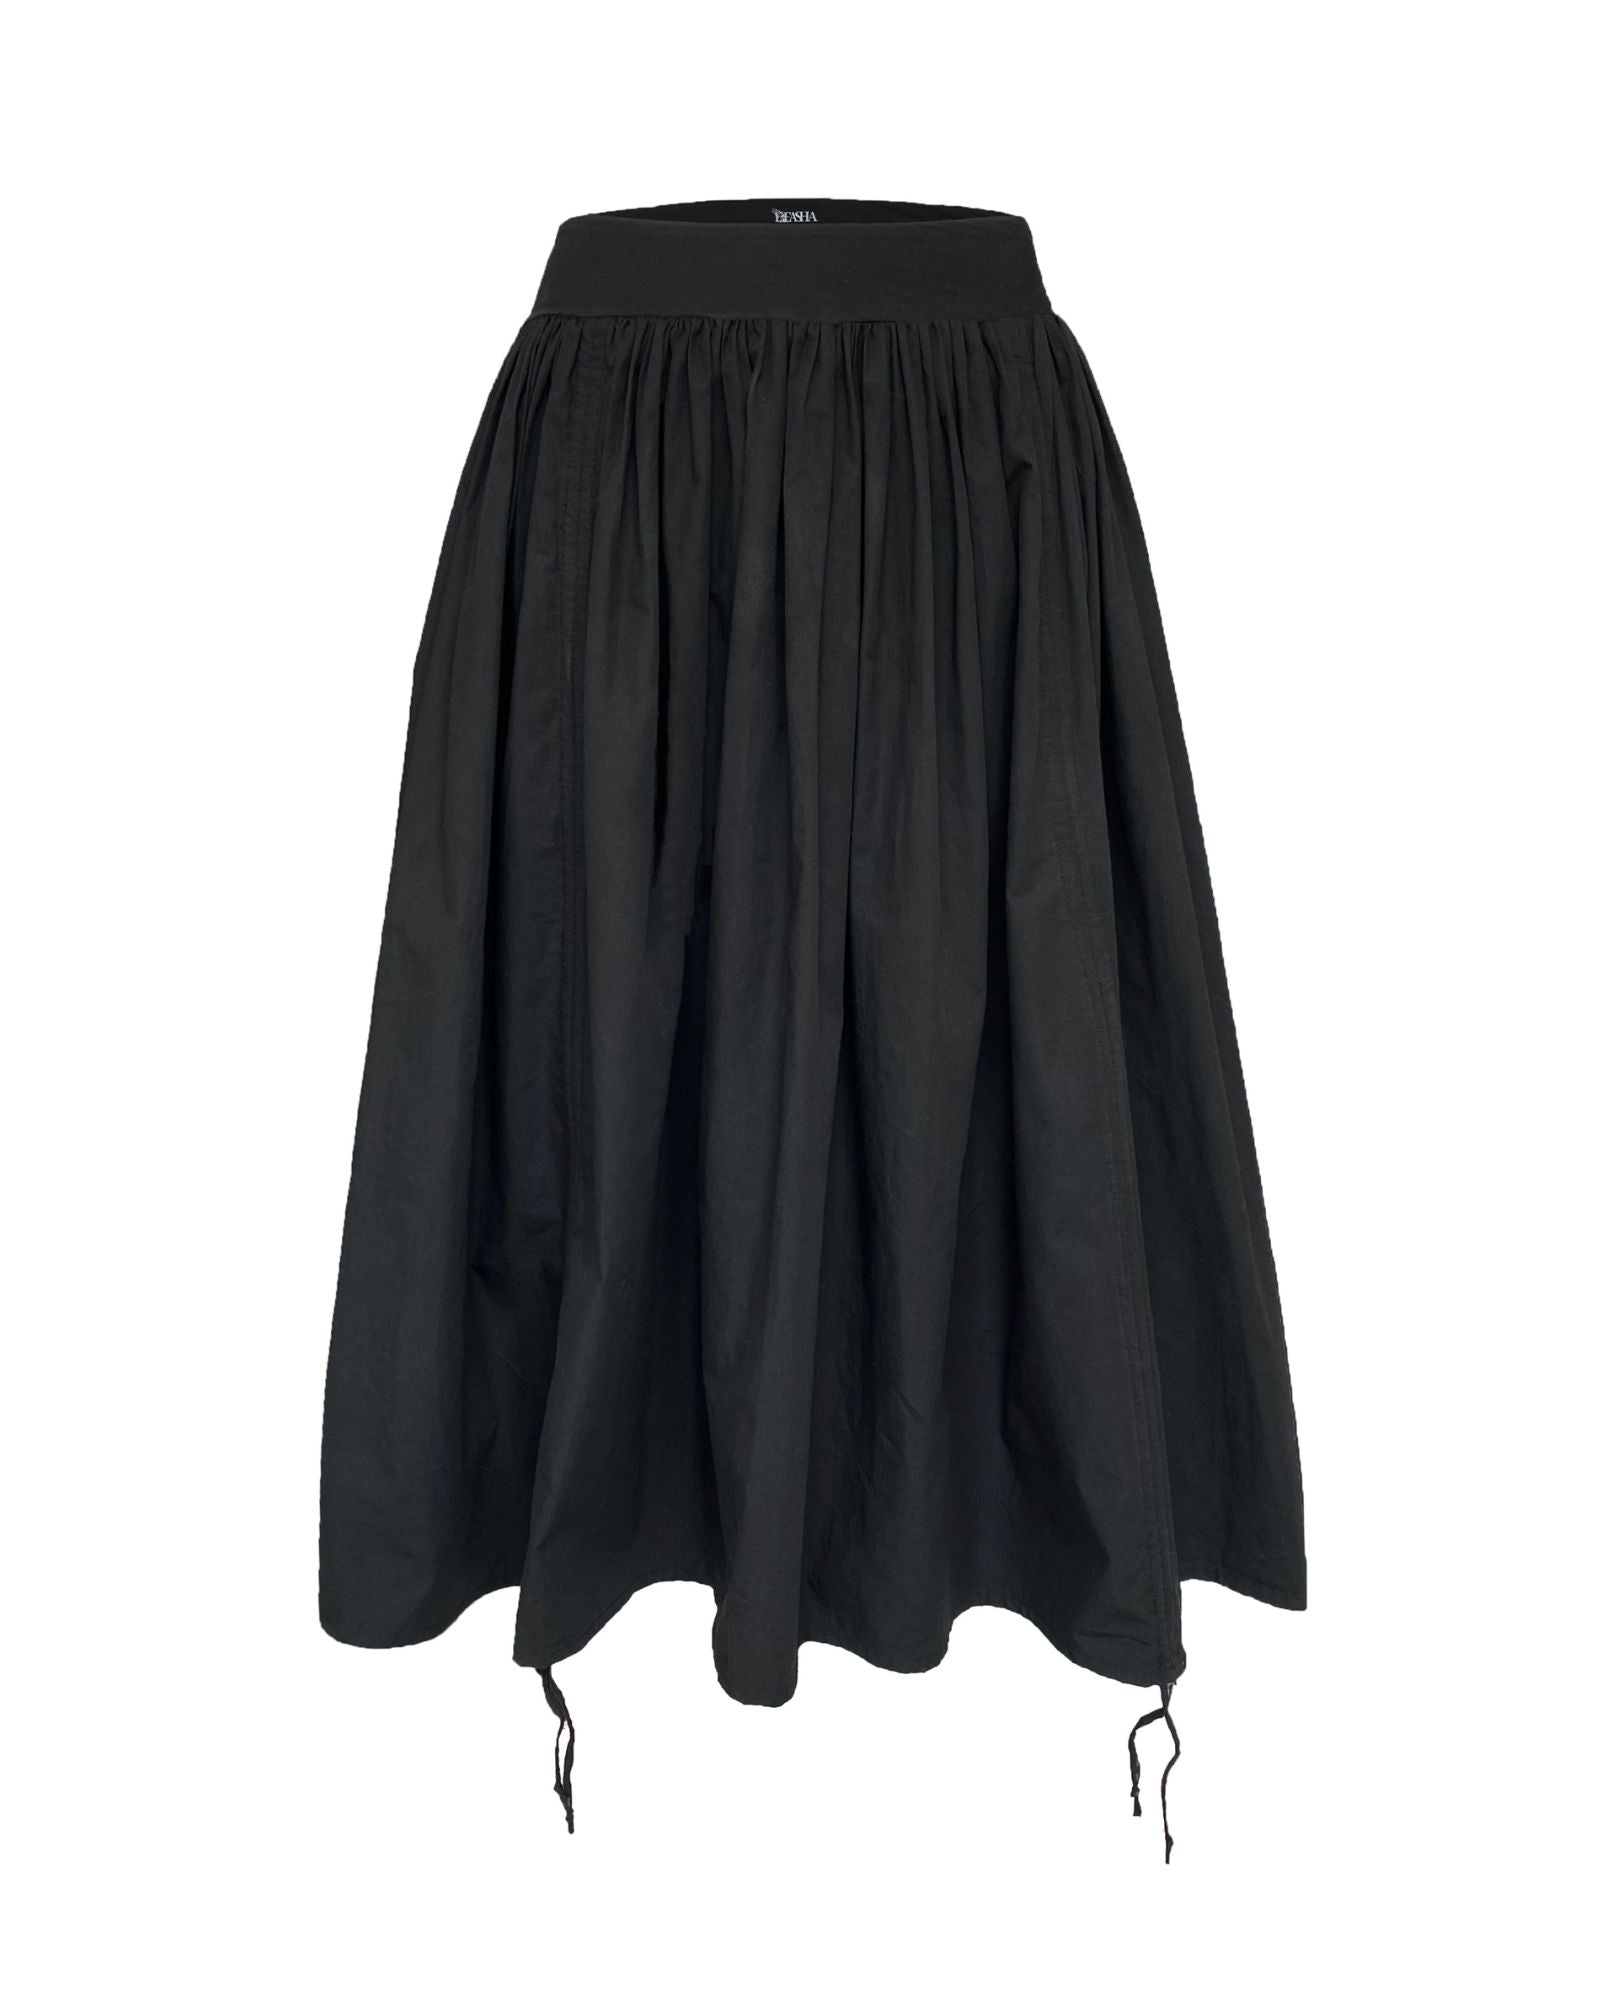 The Lola Skirt in Black